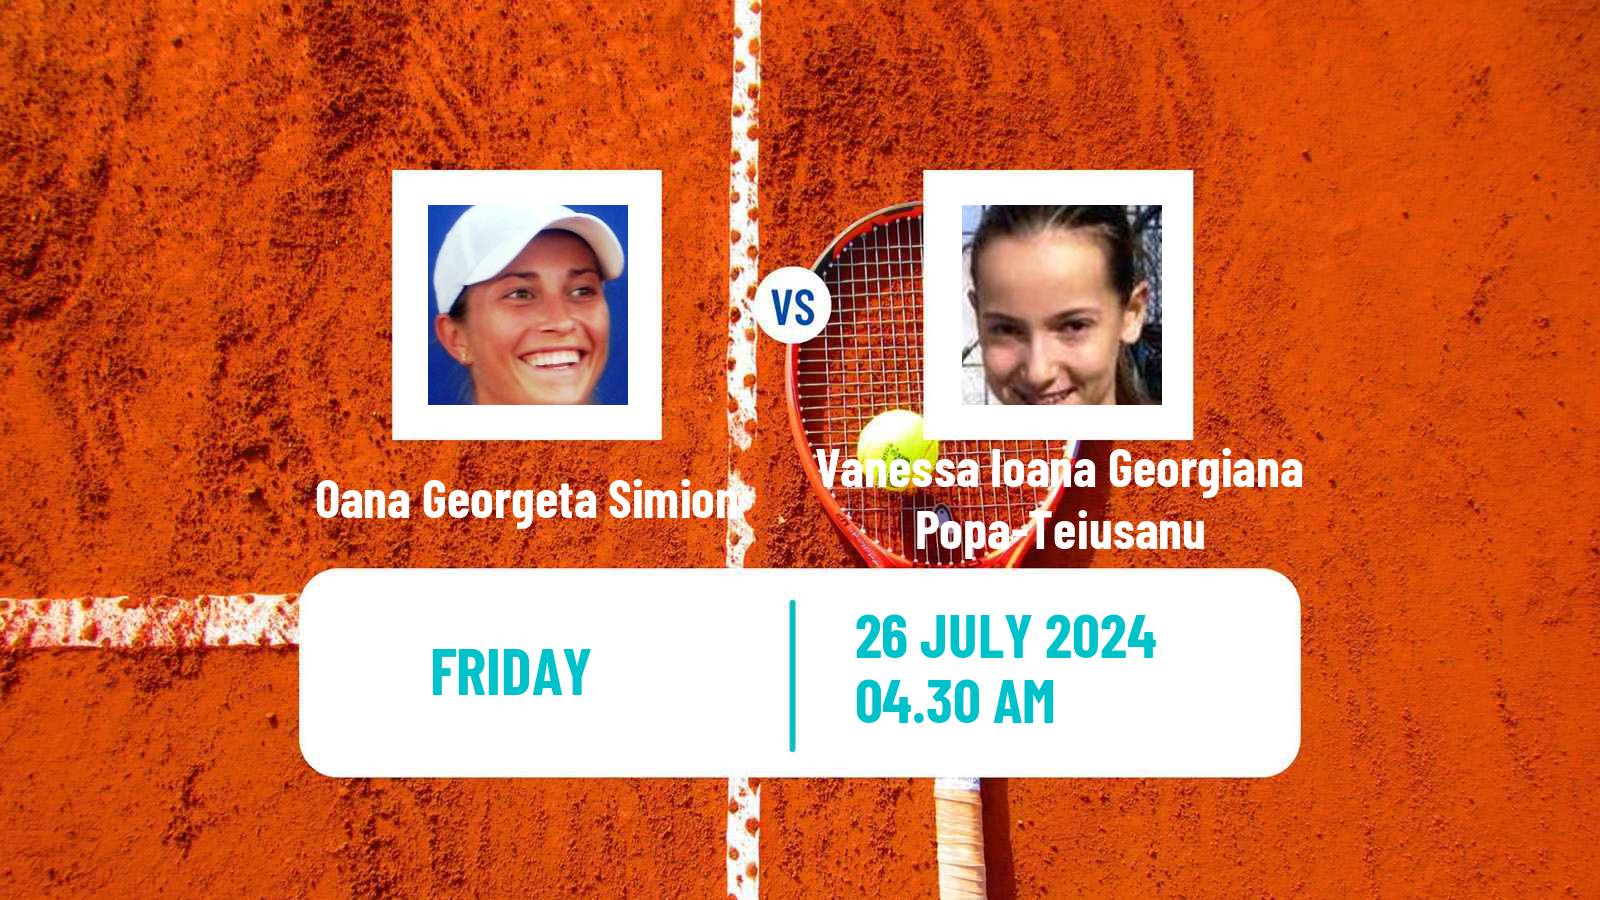 Tennis ITF W15 Satu Mare Women Oana Georgeta Simion - Vanessa Ioana Georgiana Popa-Teiusanu